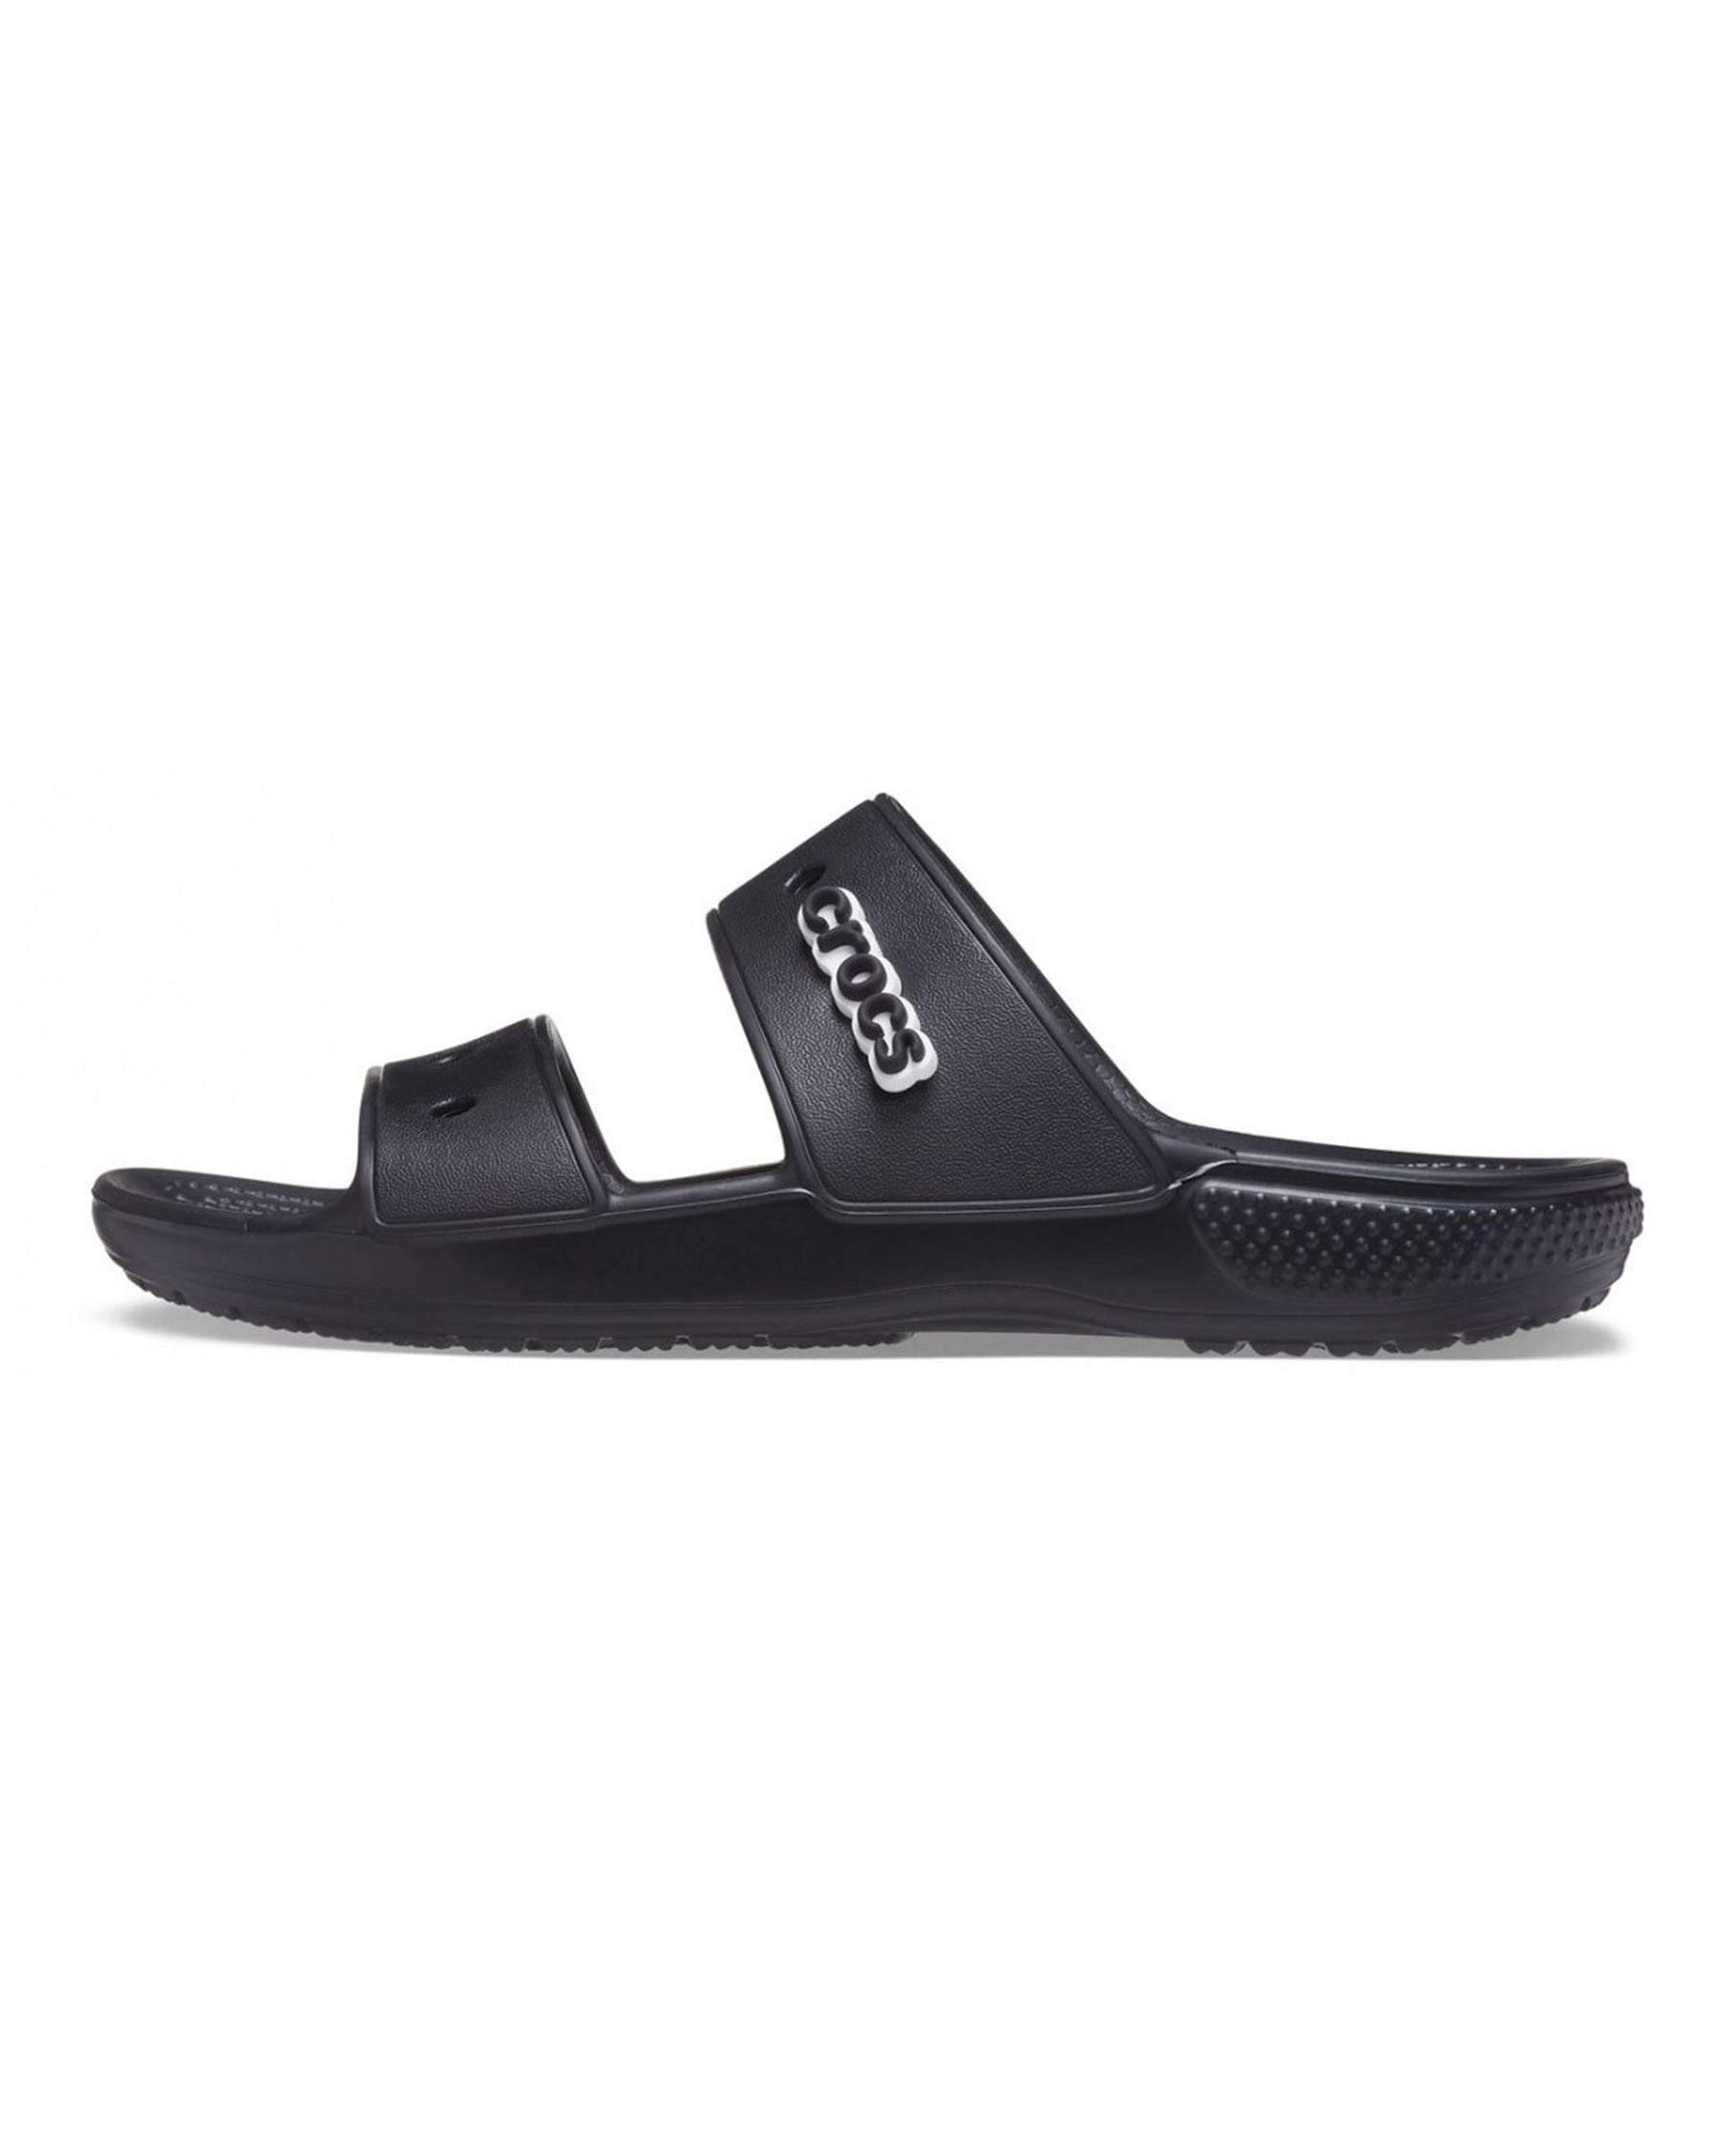 Classic Crocs Sandal Black Unisex